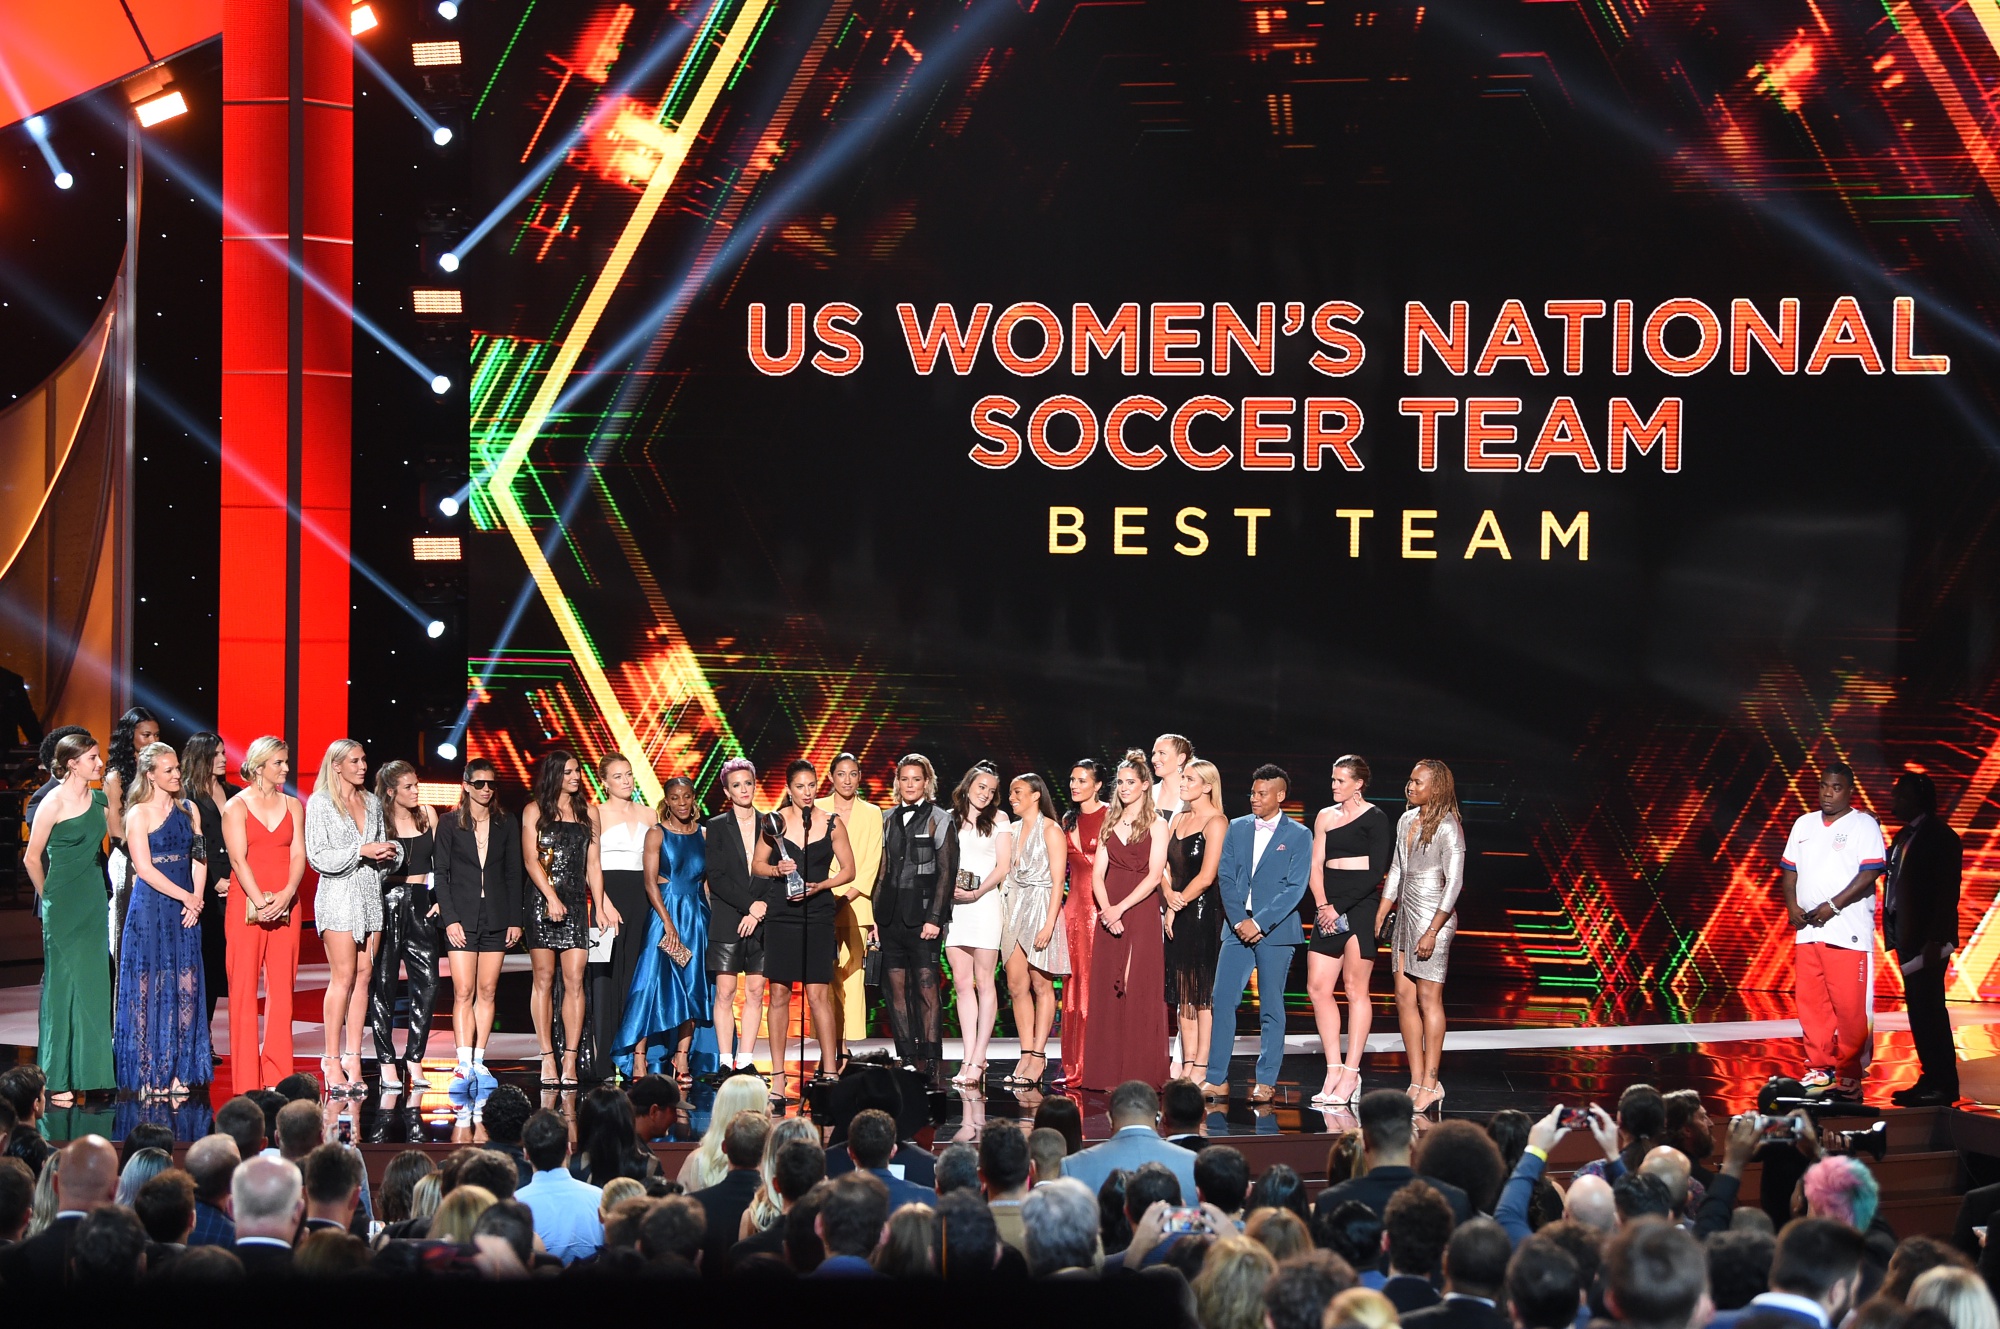 Alex U.S. Women's Soccer Team Honored At ESPY Awards Bloomberg